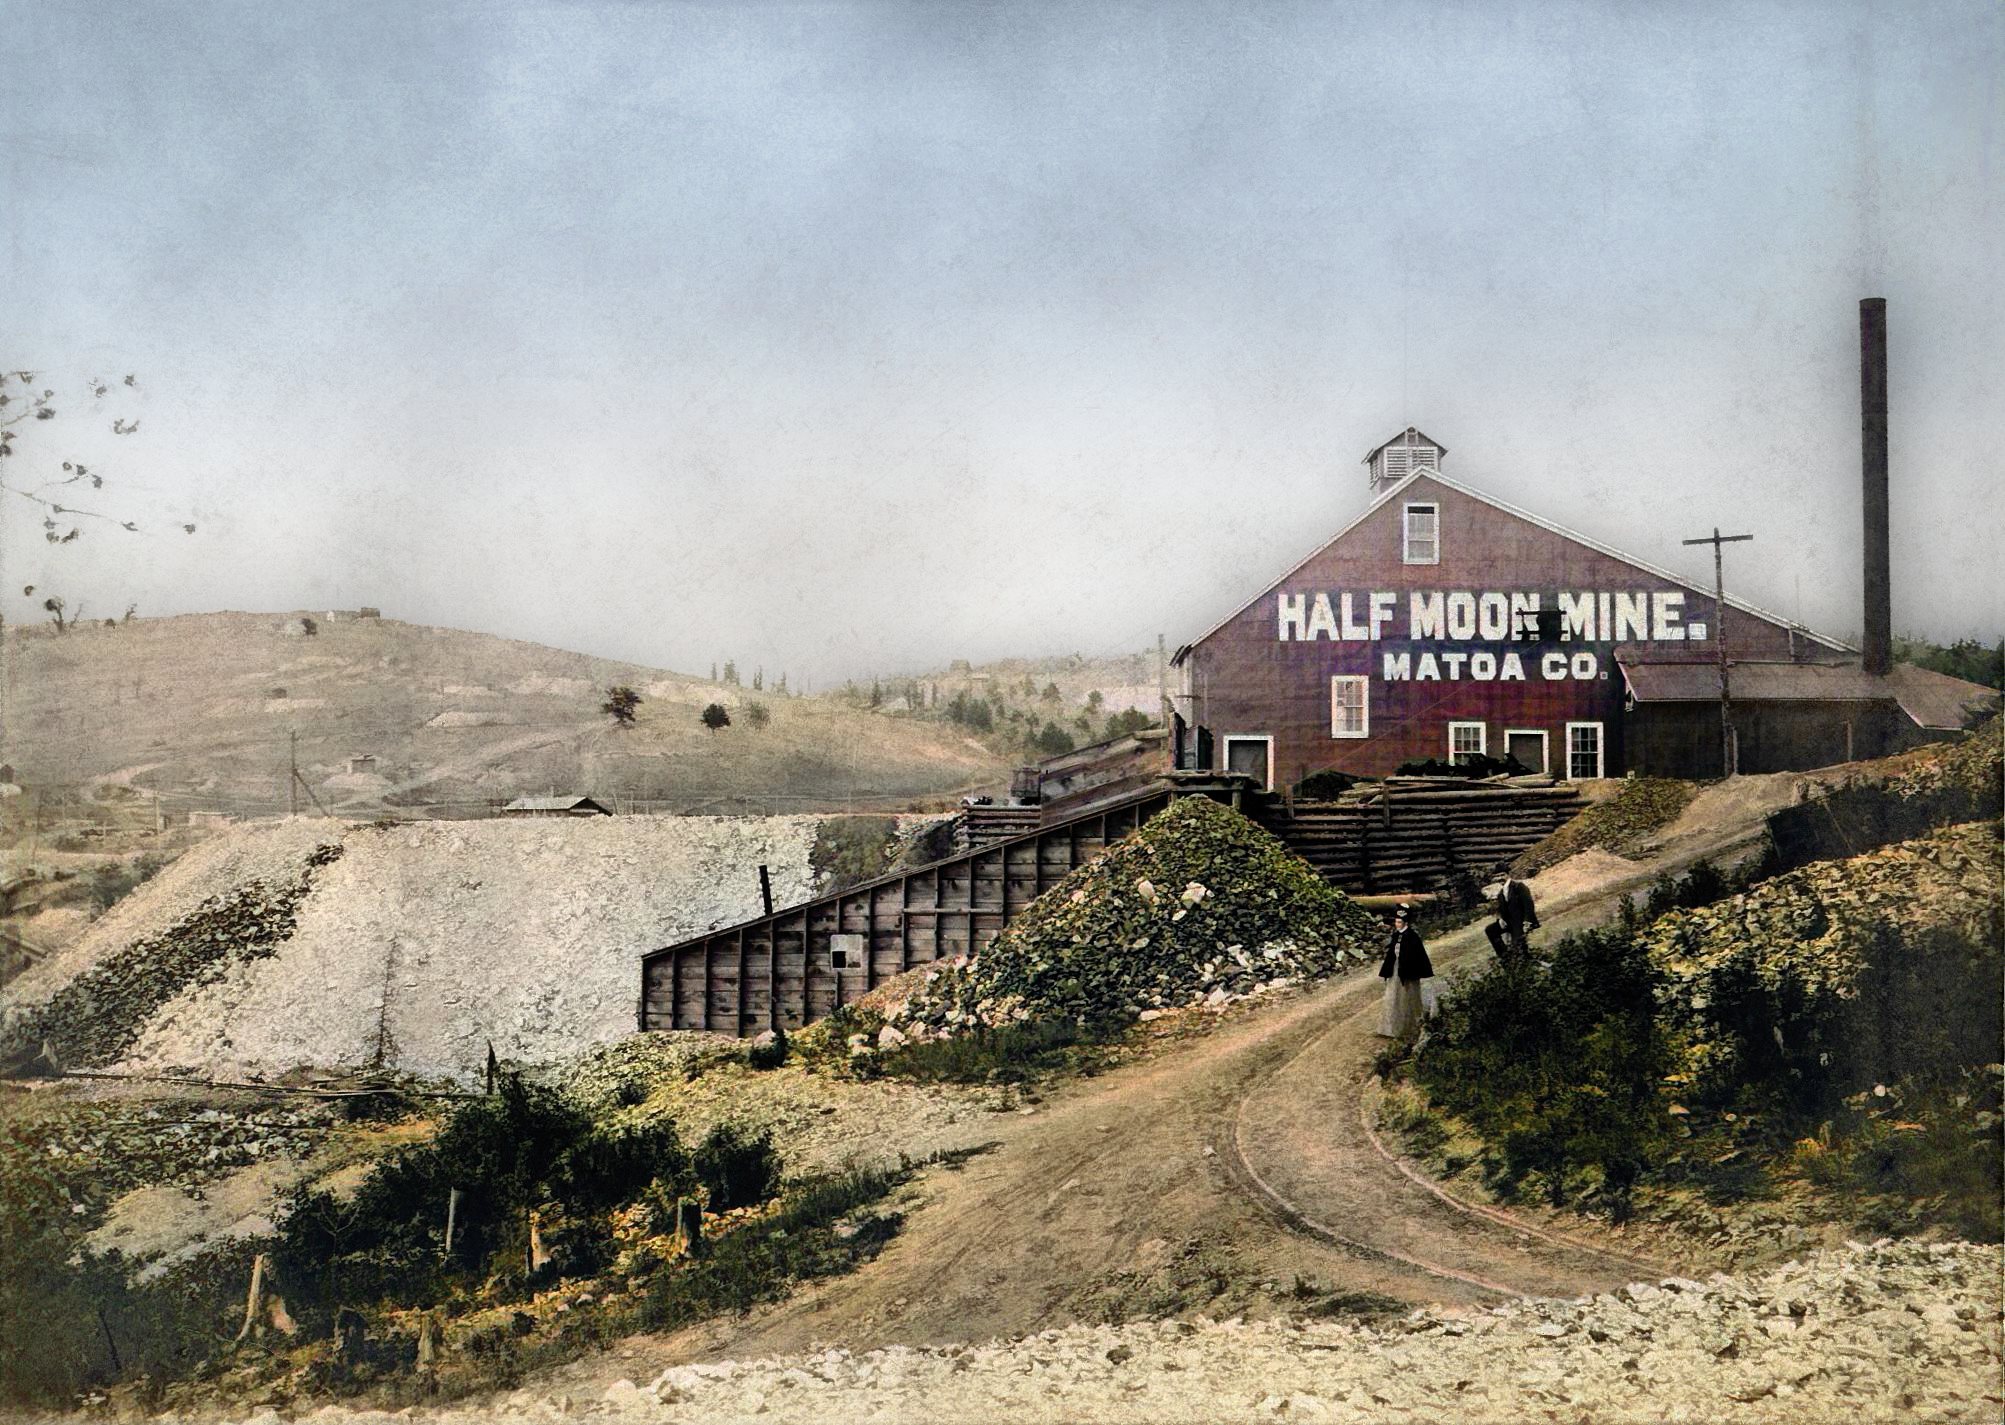 People Roaming Around the Half Moon Mine of Matoa Company in Early 1900's